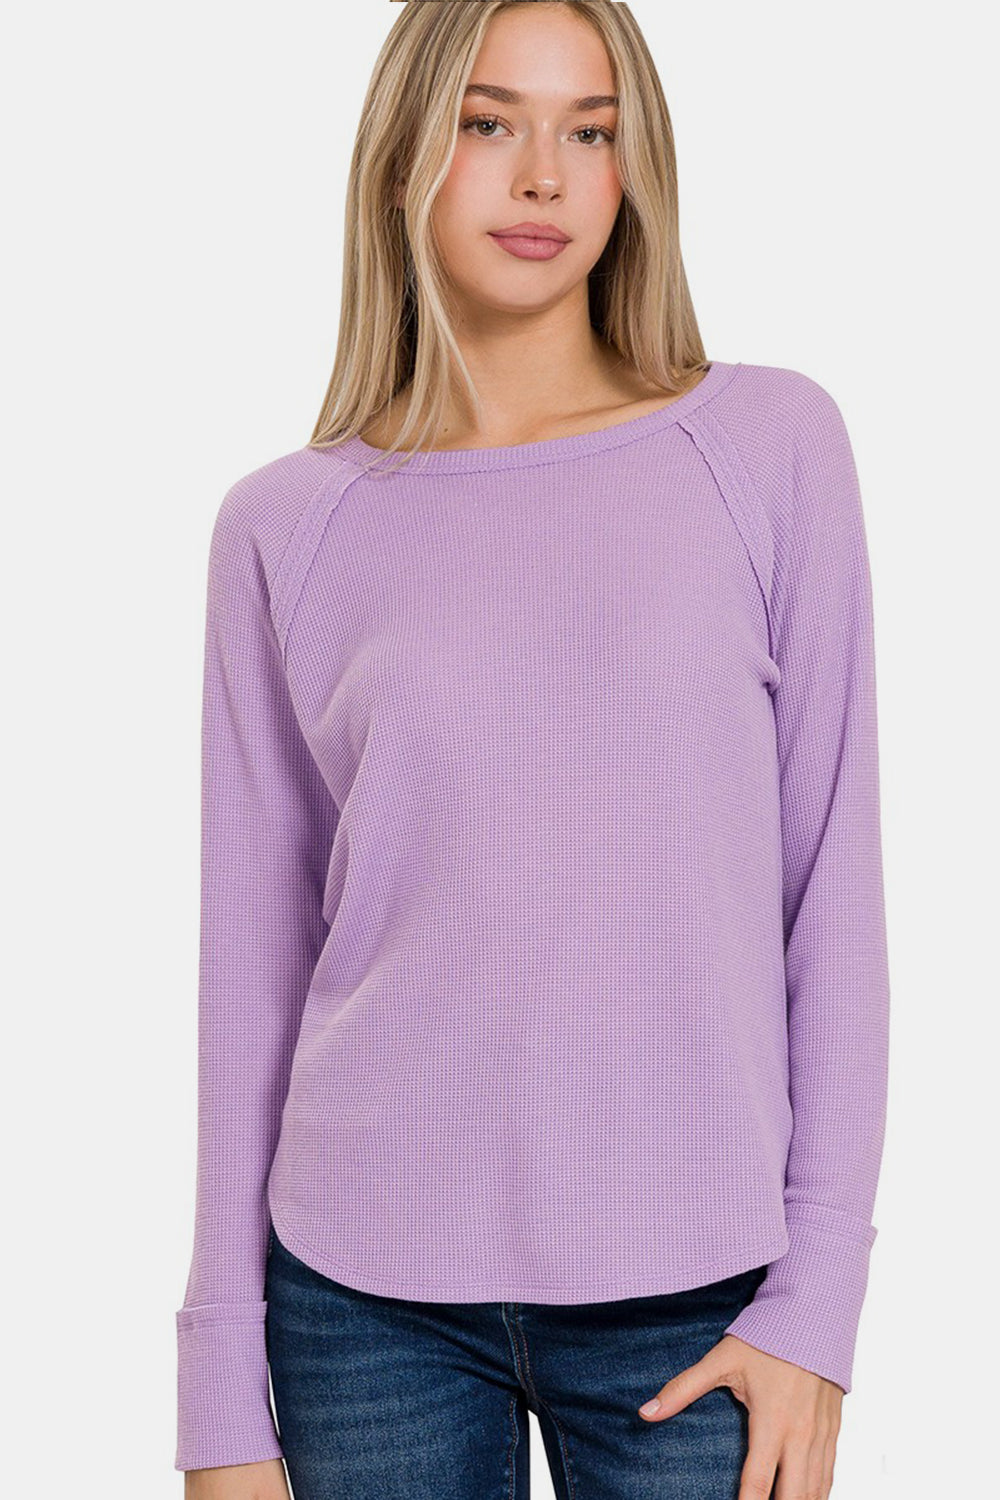 Zenana Waffle Long Sleeve T-Shirt in Lavender